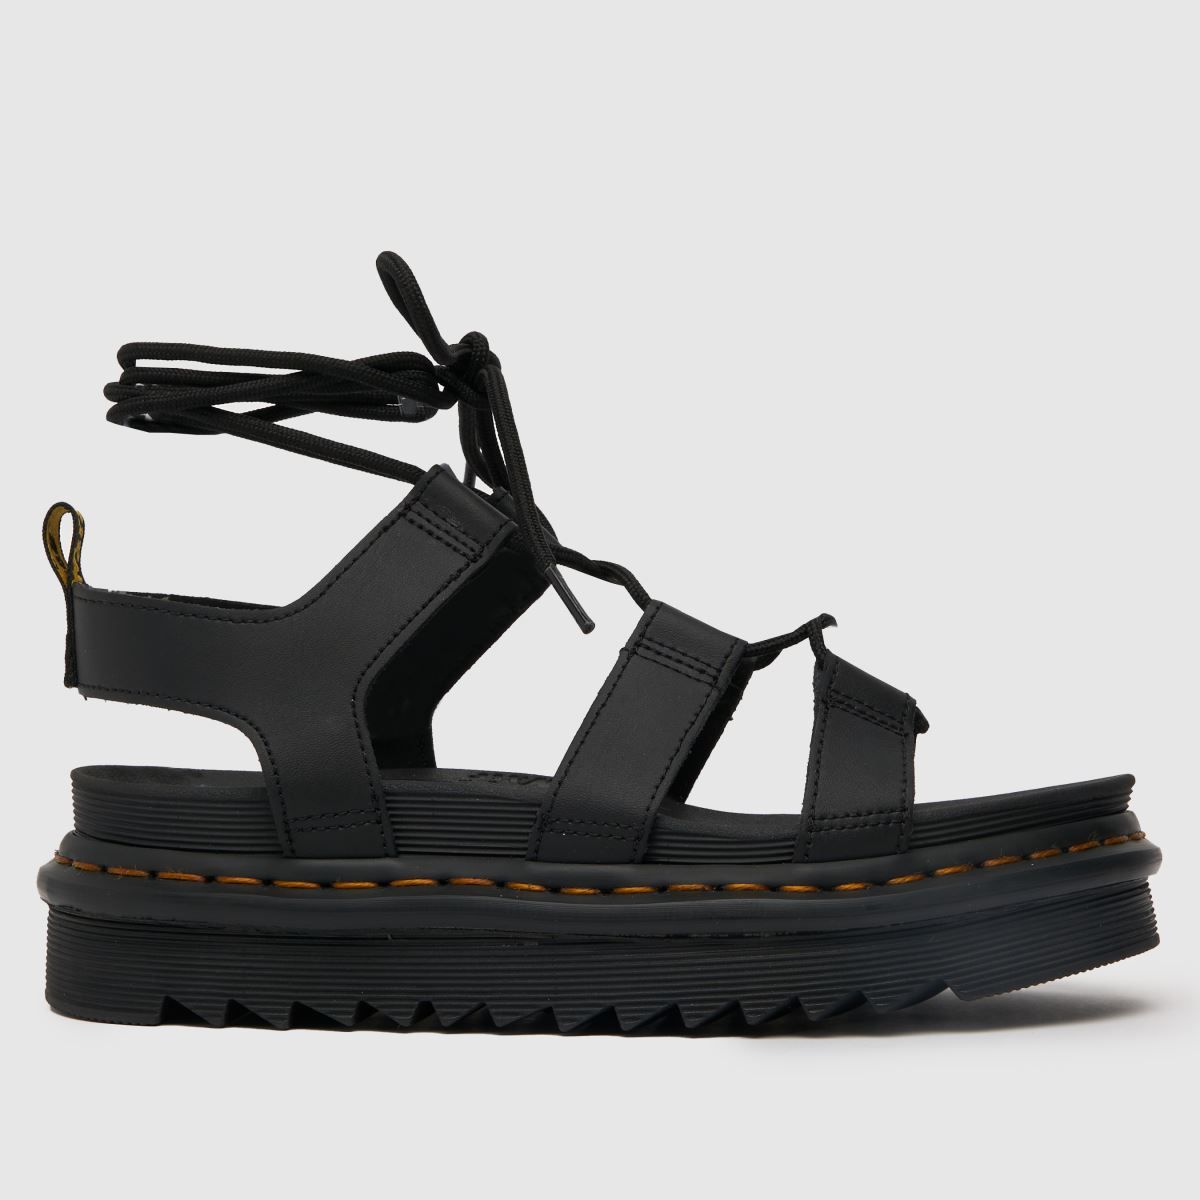 Dr Martens nartilla sandals in black | Schuh